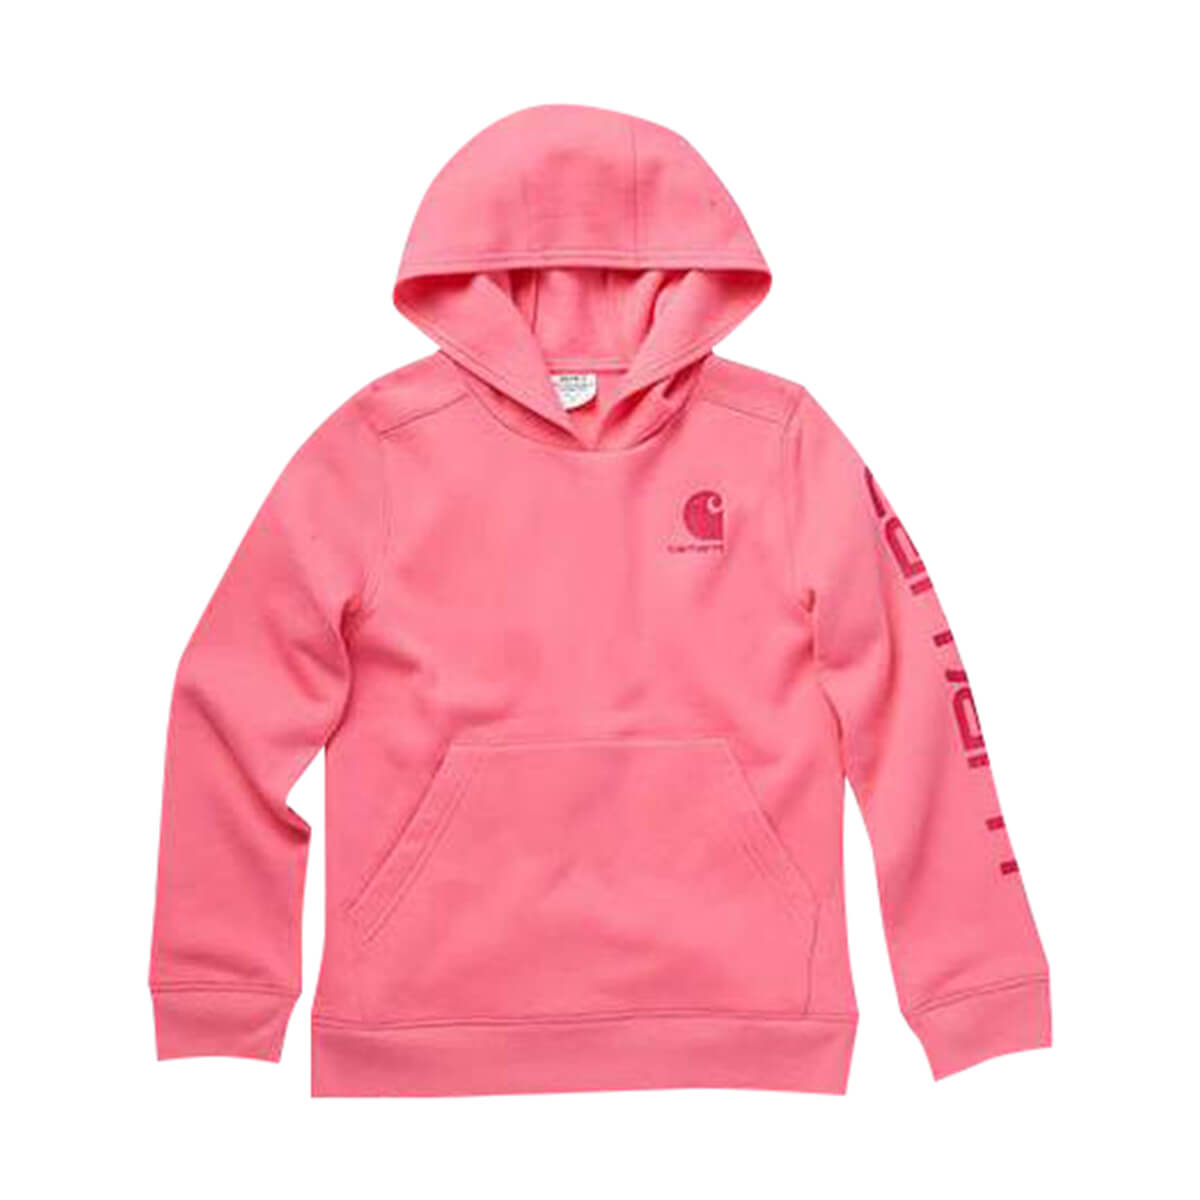 Carhartt Kids Fleece Long Sleeve Graphic Sweatshirt - Pink